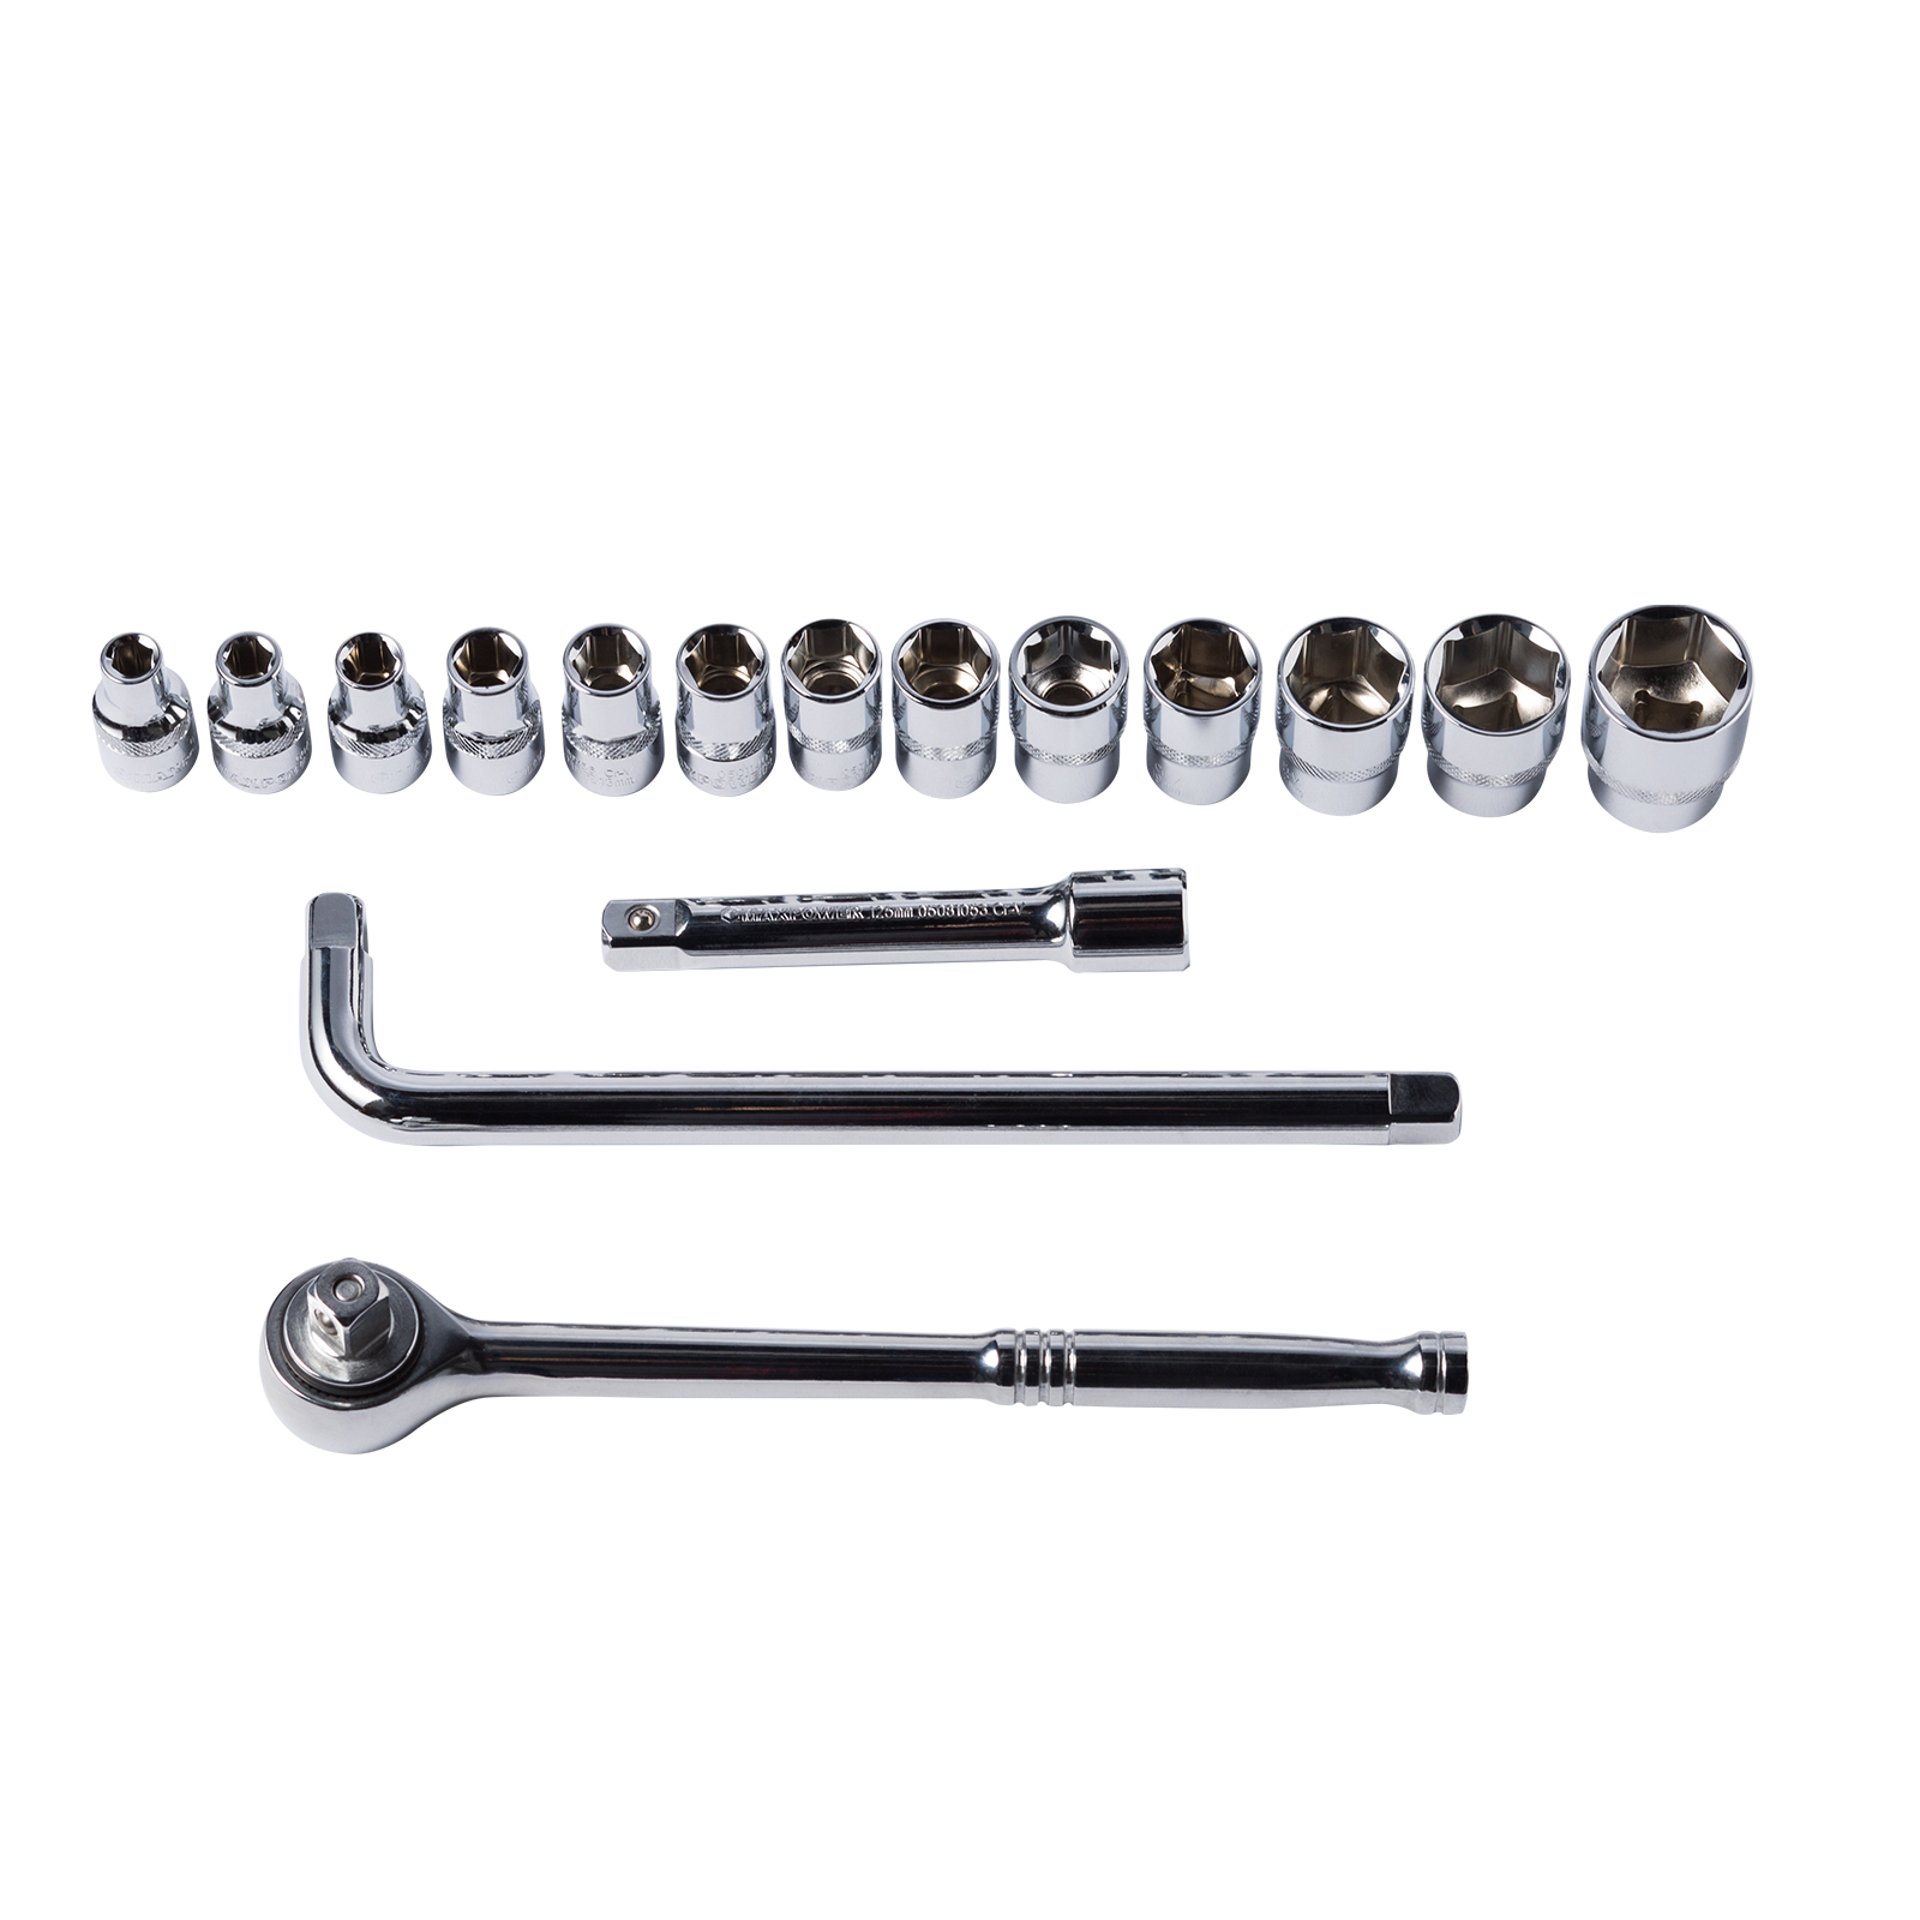 MAXPOWER 16pcs 1/2” Drive Socket Wrench Set